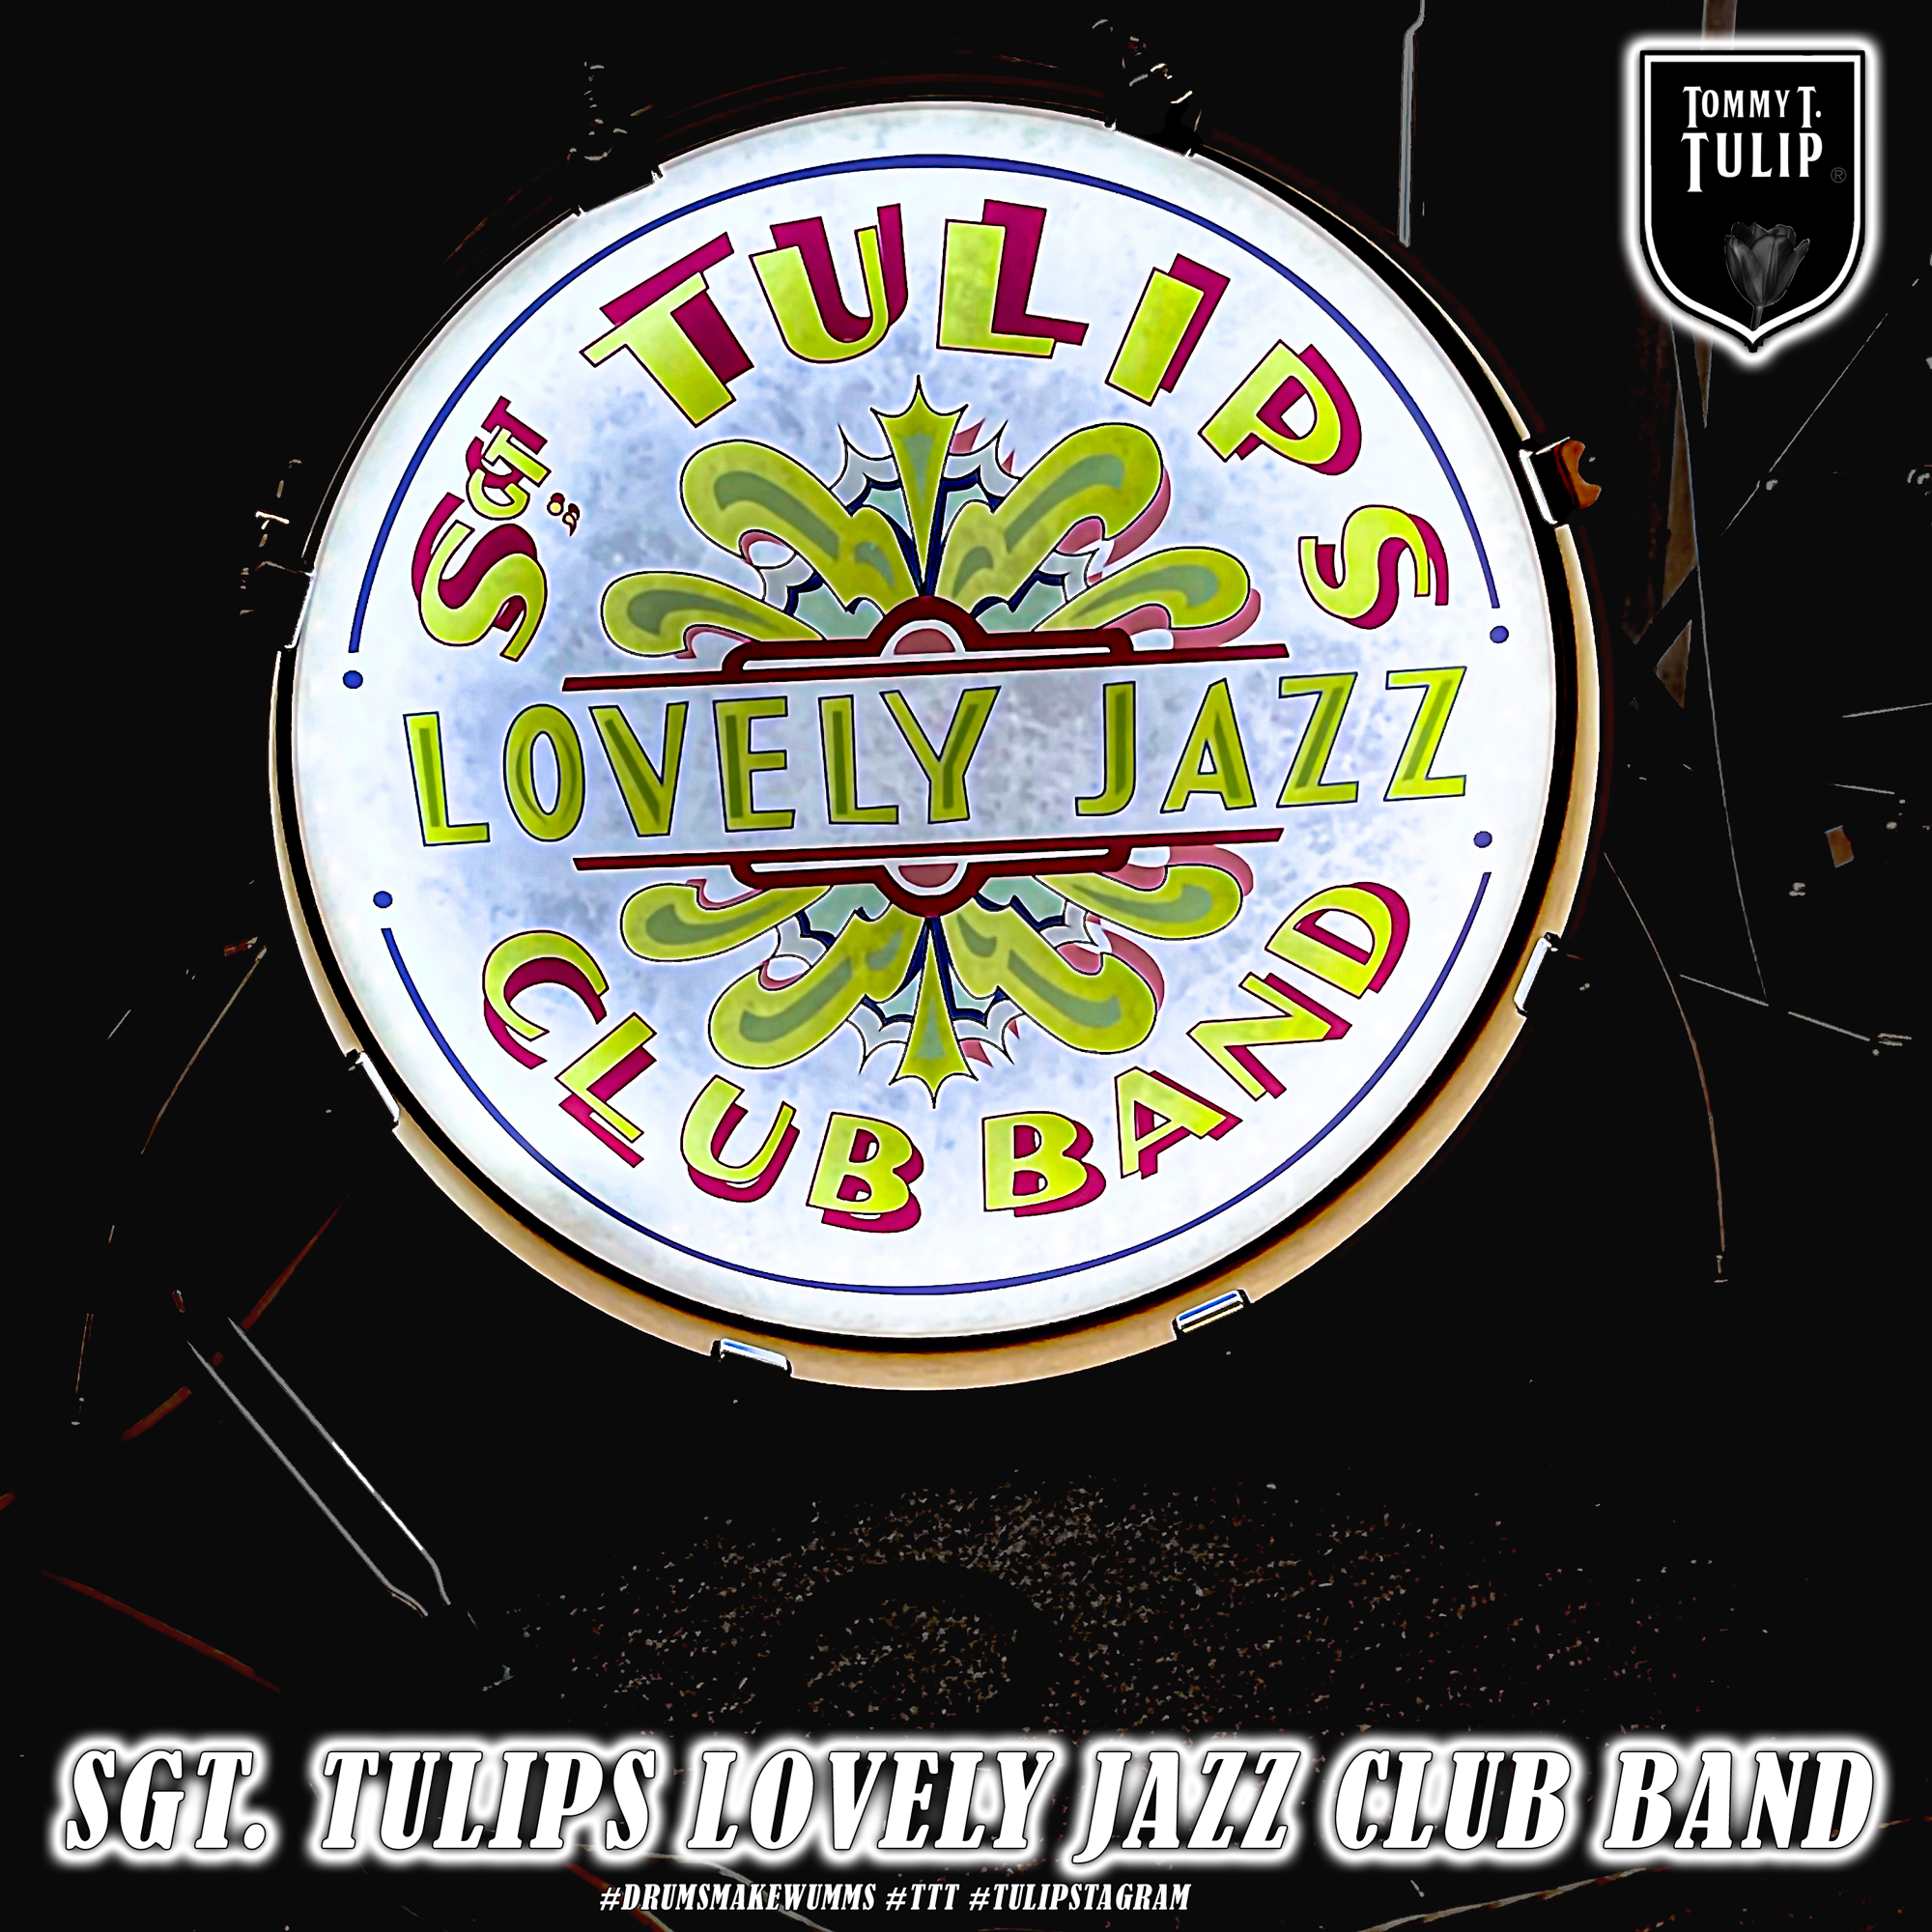 05.05.23 Sgt. Tulips Lovely Jazz Club Band #SgtTulipsLovelyJazzClubBand #TTT #Tulipstagram